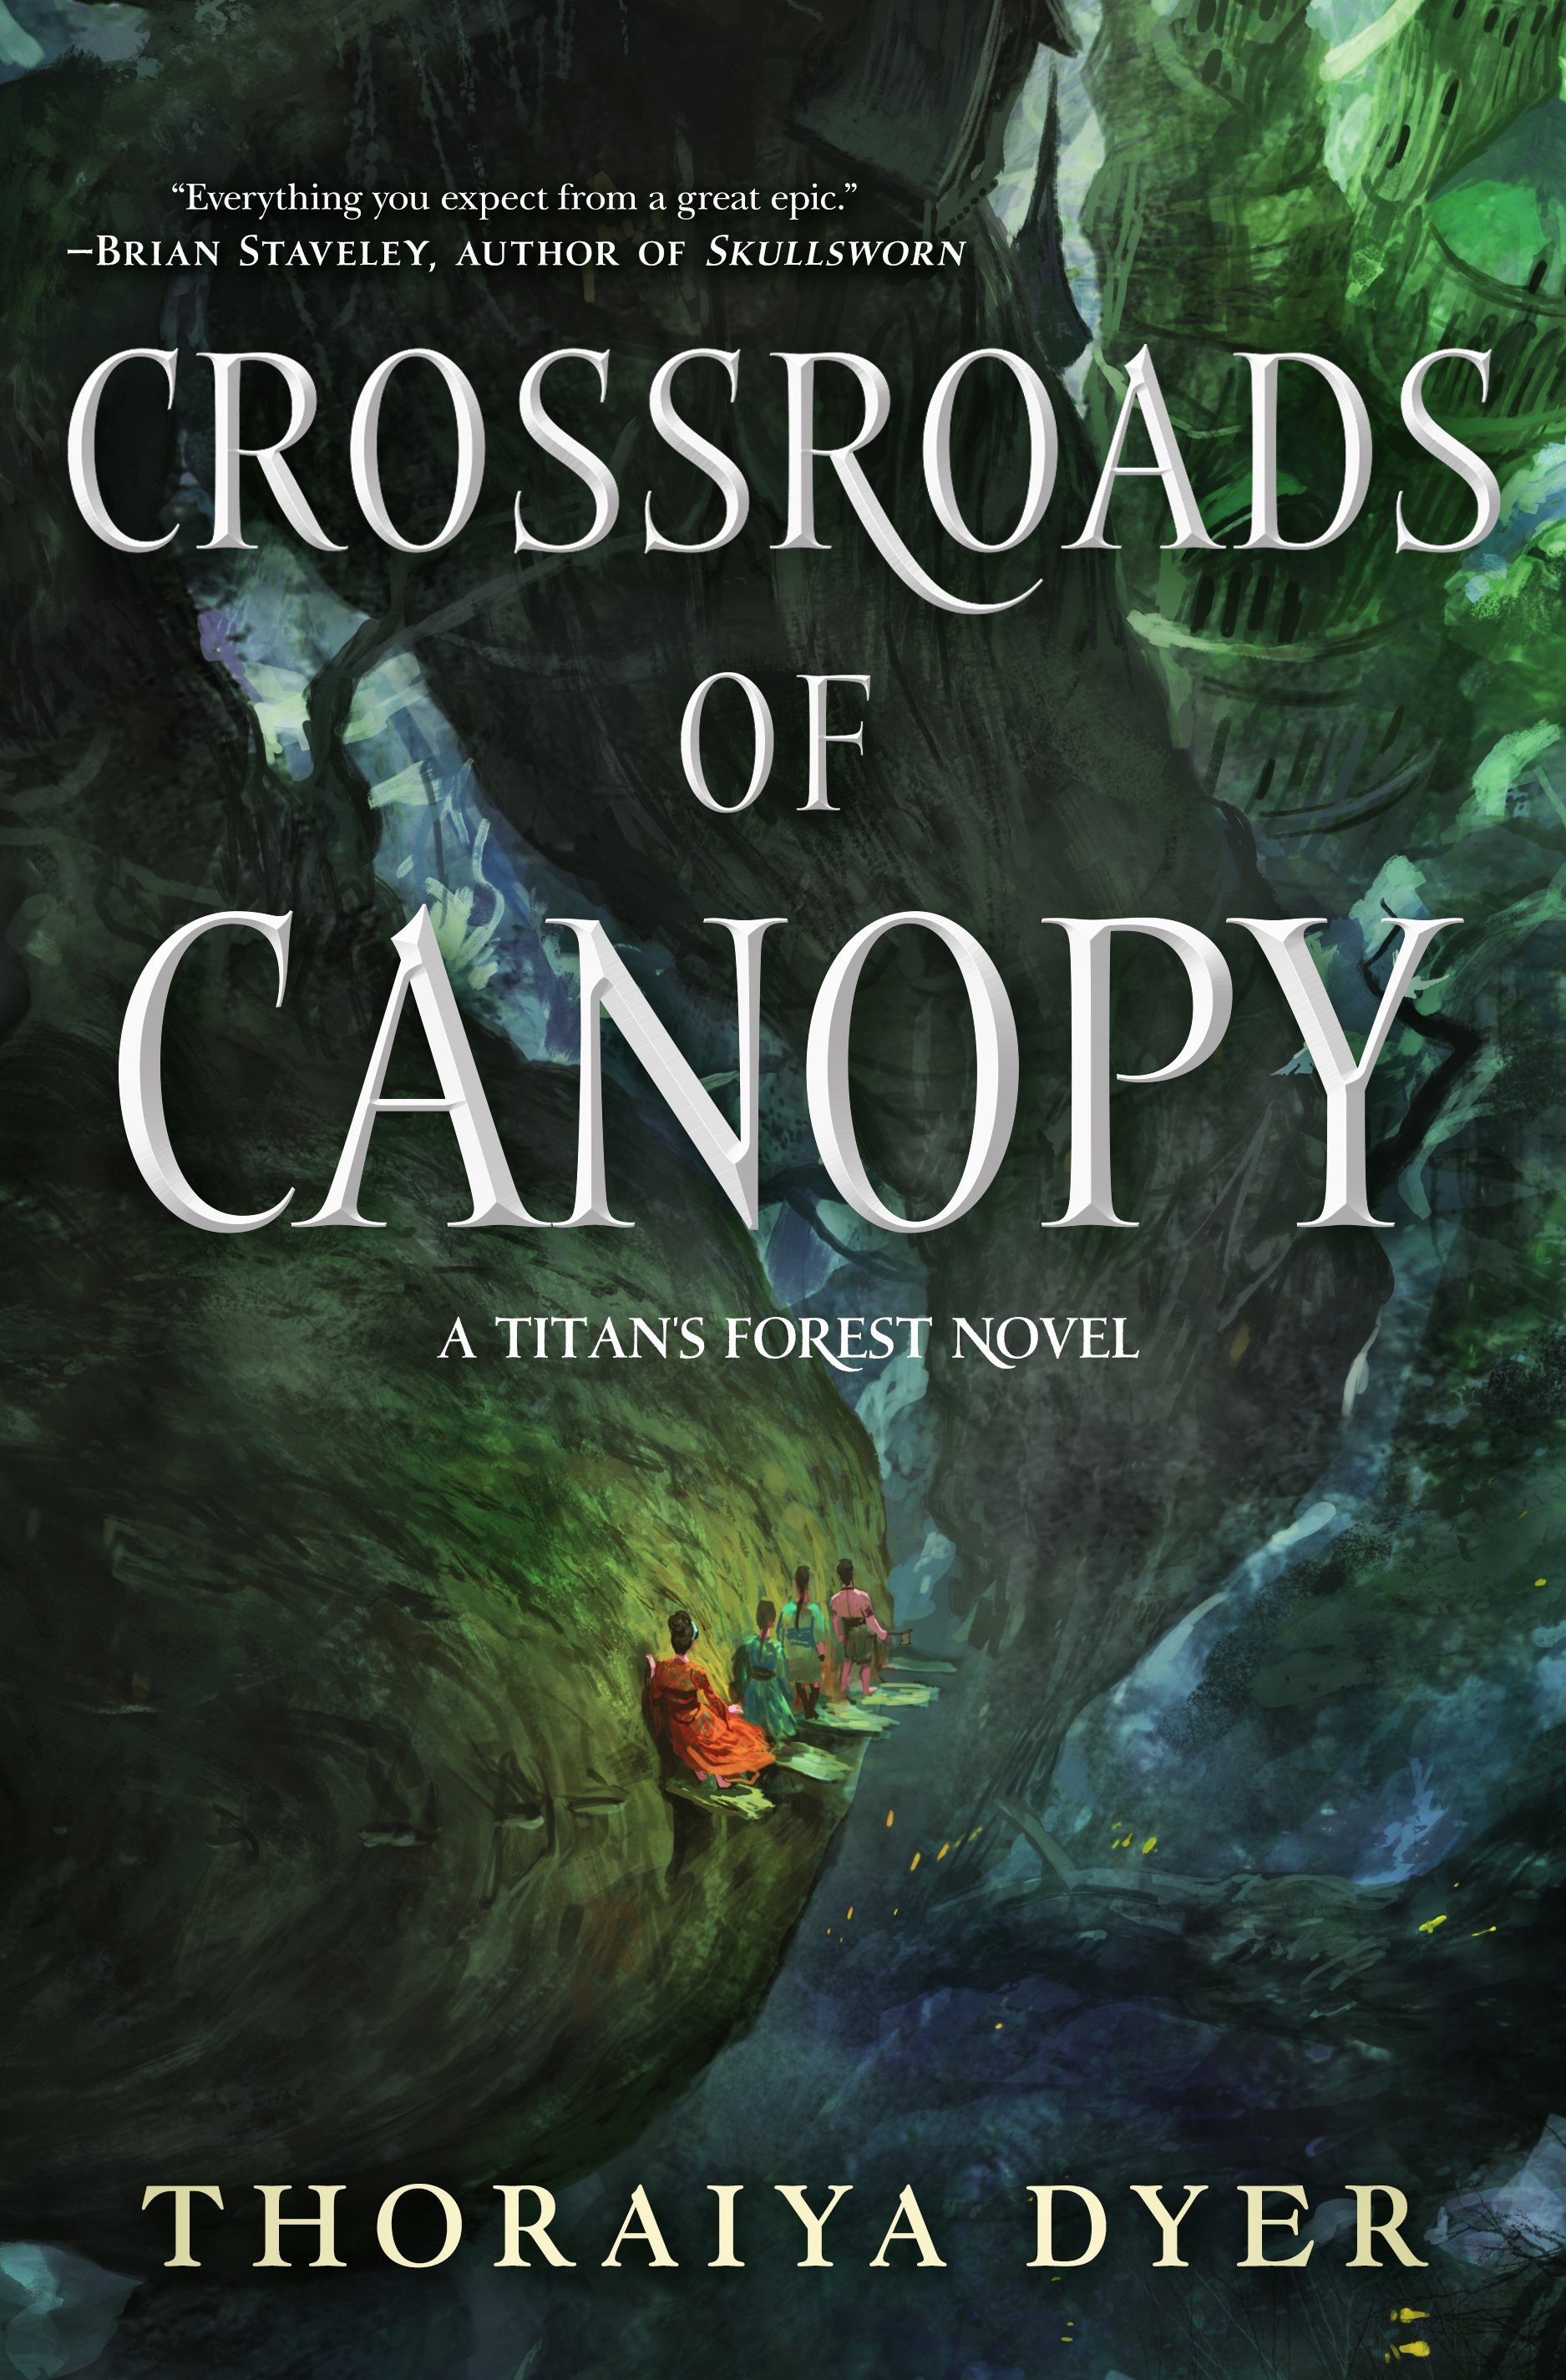 Crossroads of Canopy : A Titan's Forest novel by Thoraiya Dyer